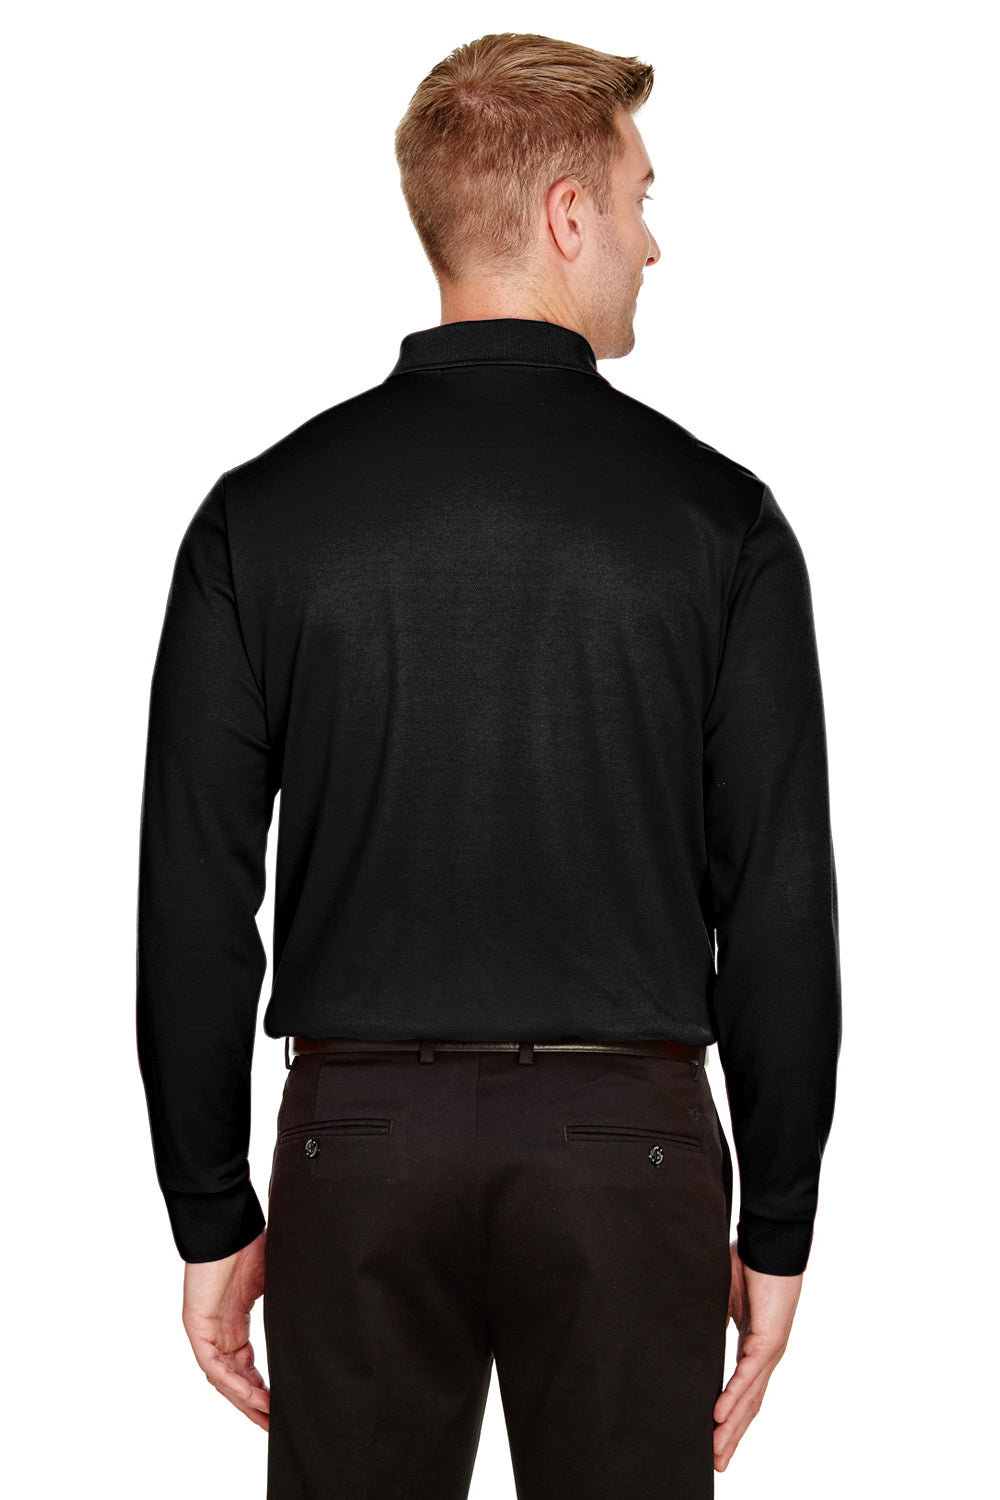 Devon & Jones DG20L Mens CrownLux Performance Moisture Wicking Long Sleeve Polo Shirt Black Back